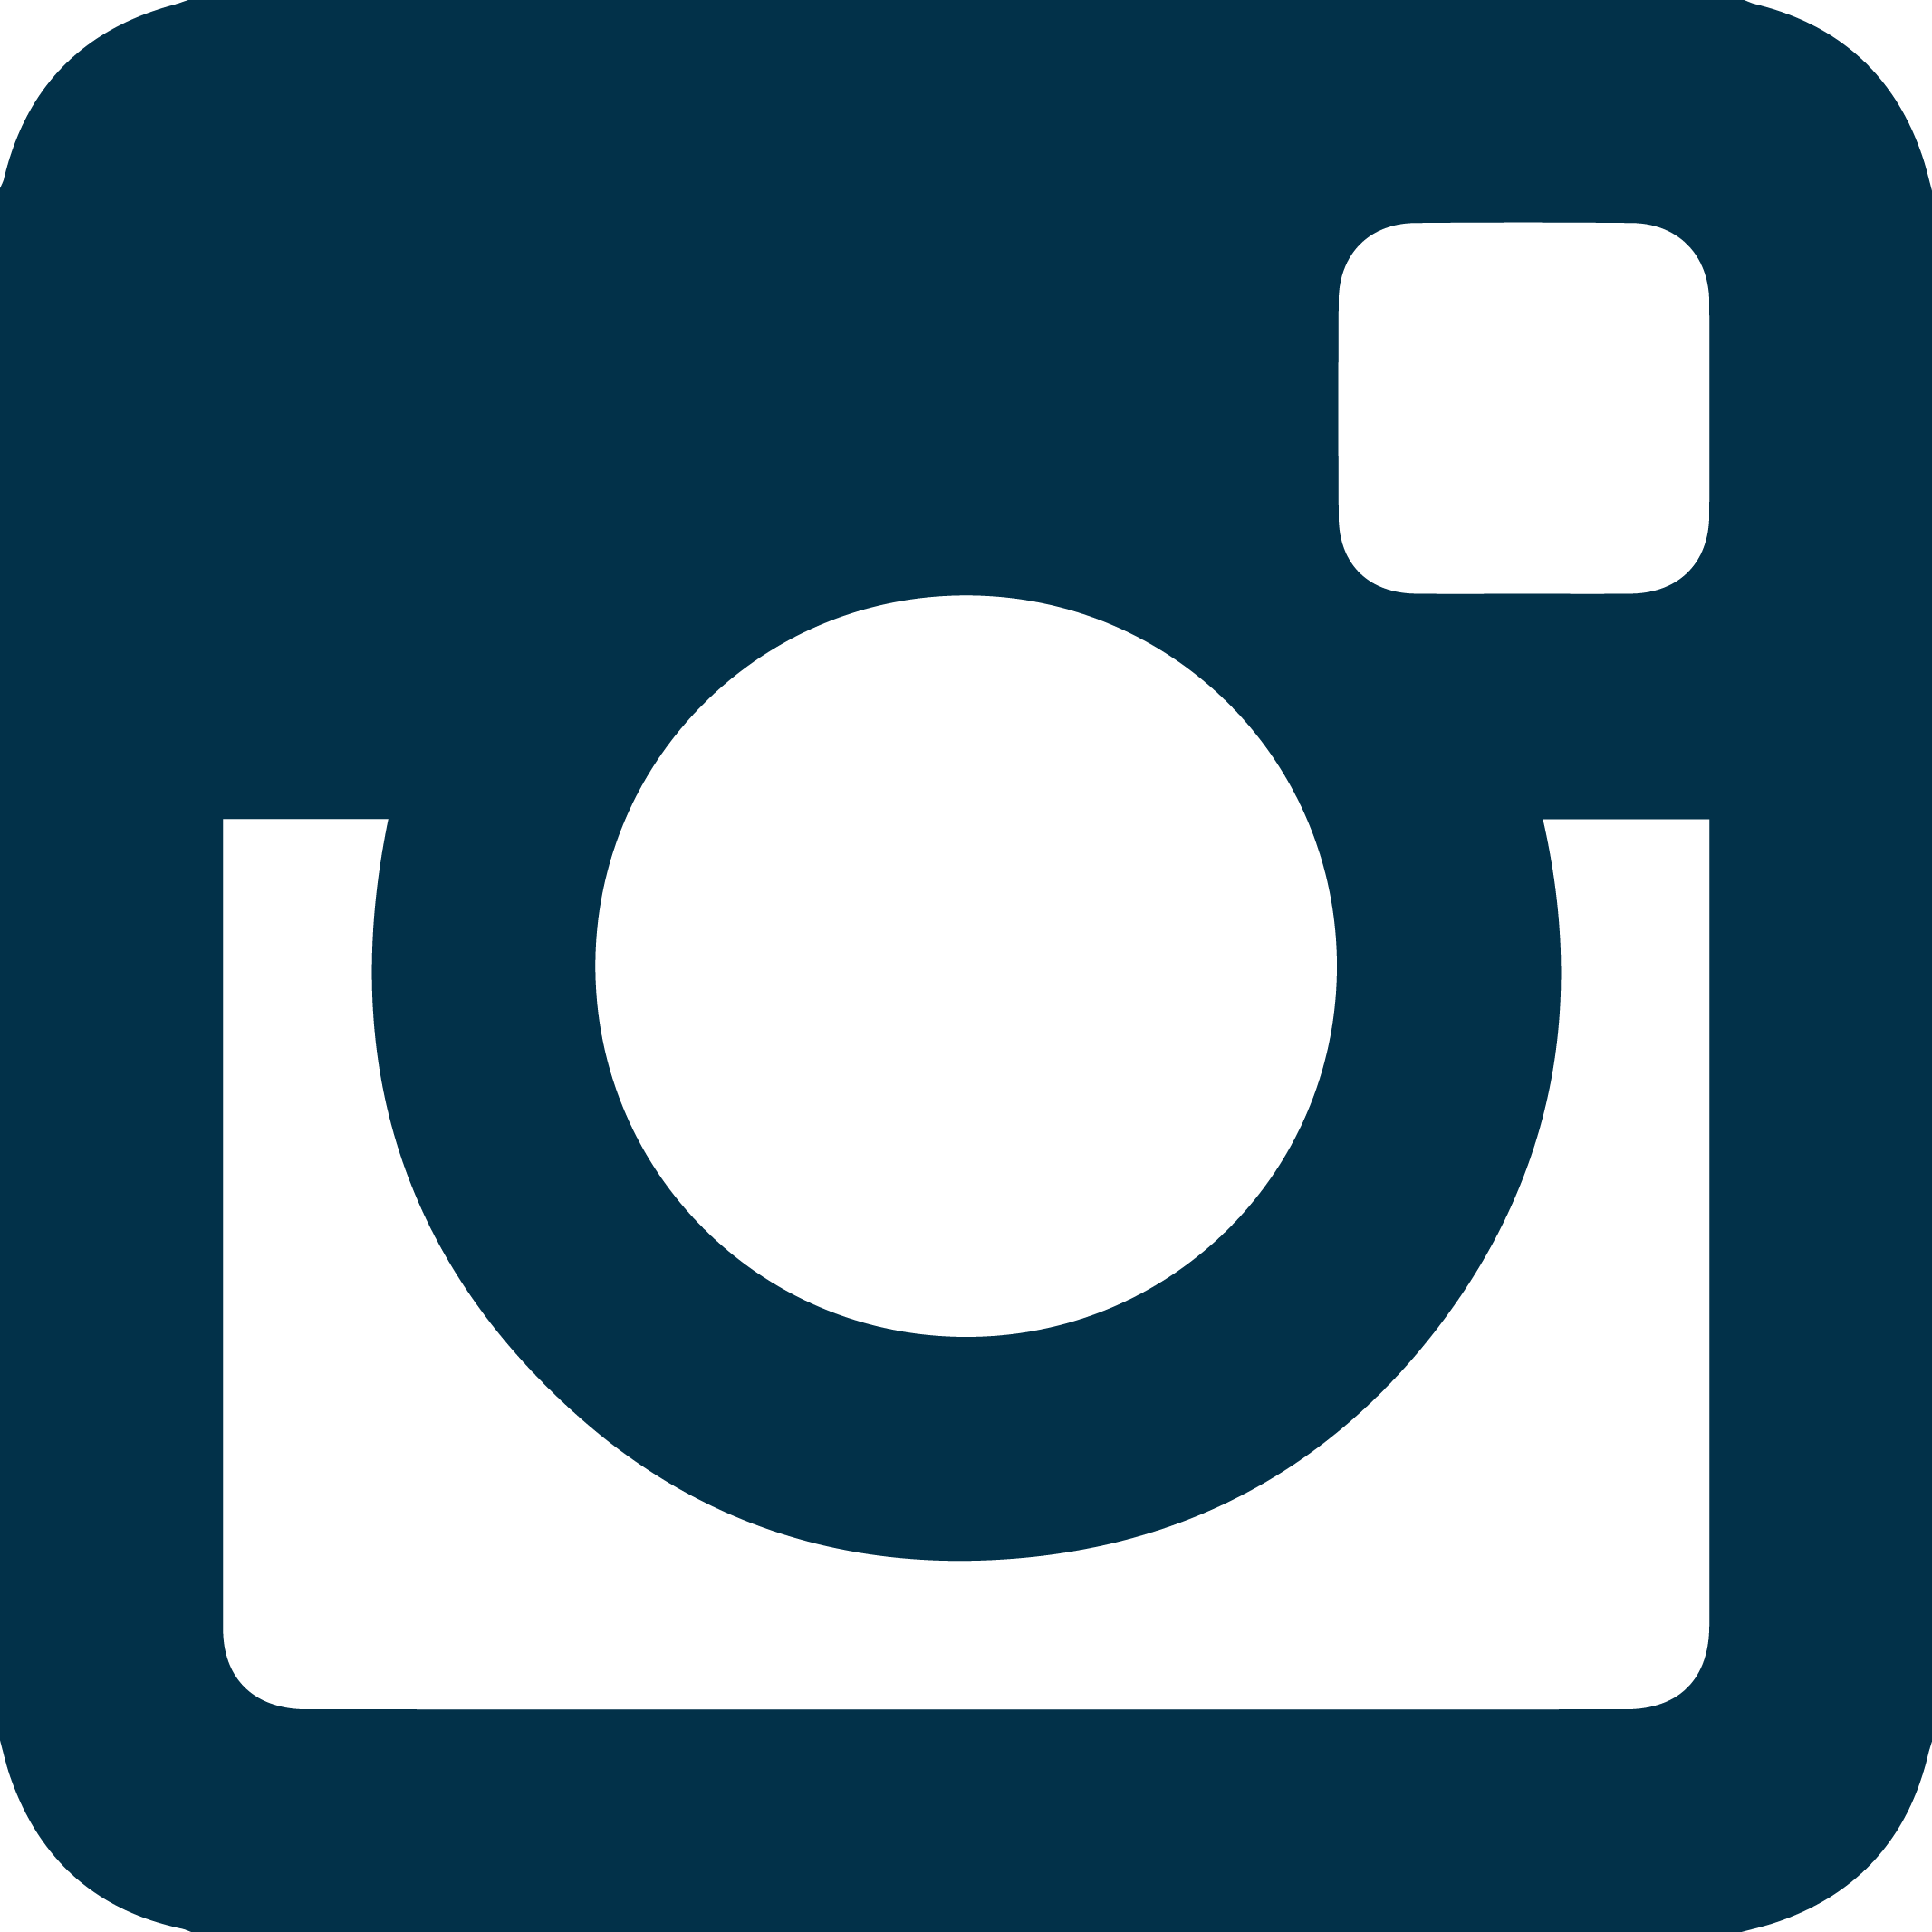 Lpl On Facebook Icon Lpl On Instagram Icon Transparent Background Black Instagram Logo Png Clipart Large Size Png Image Pikpng